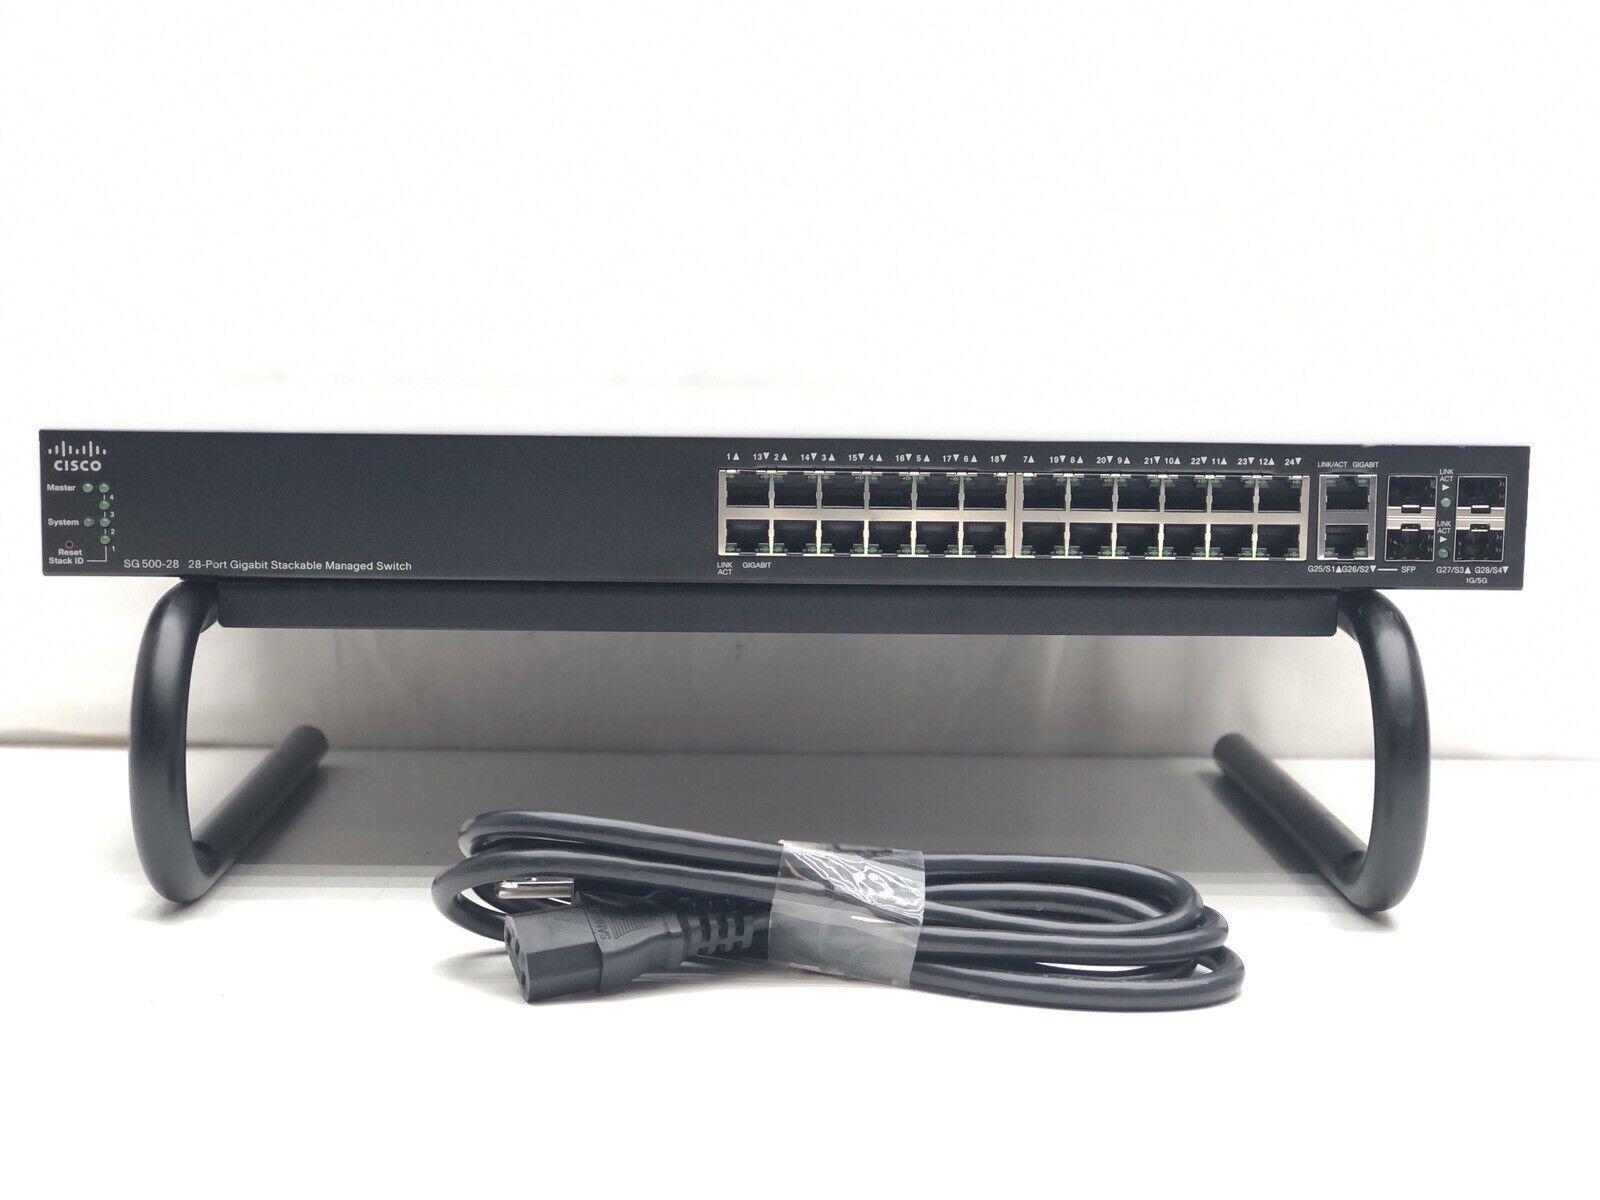 Cisco SG500-28 28 Port Gigabit Stackable Managed Switch